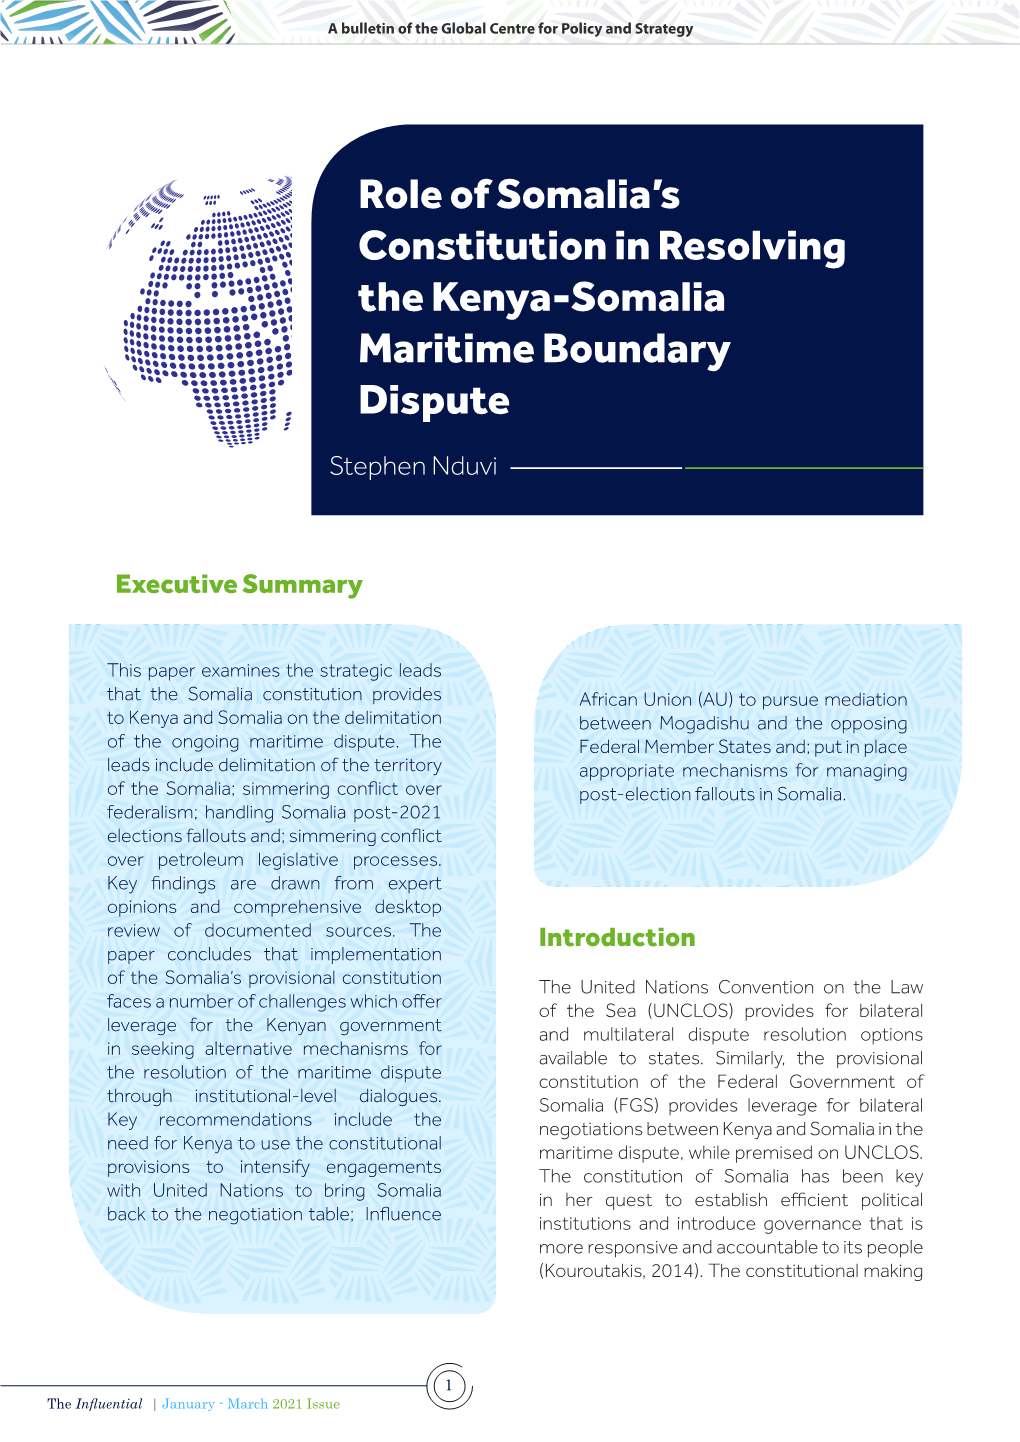 Role of Somalia's Constitution in Resolving the Kenya-Somalia